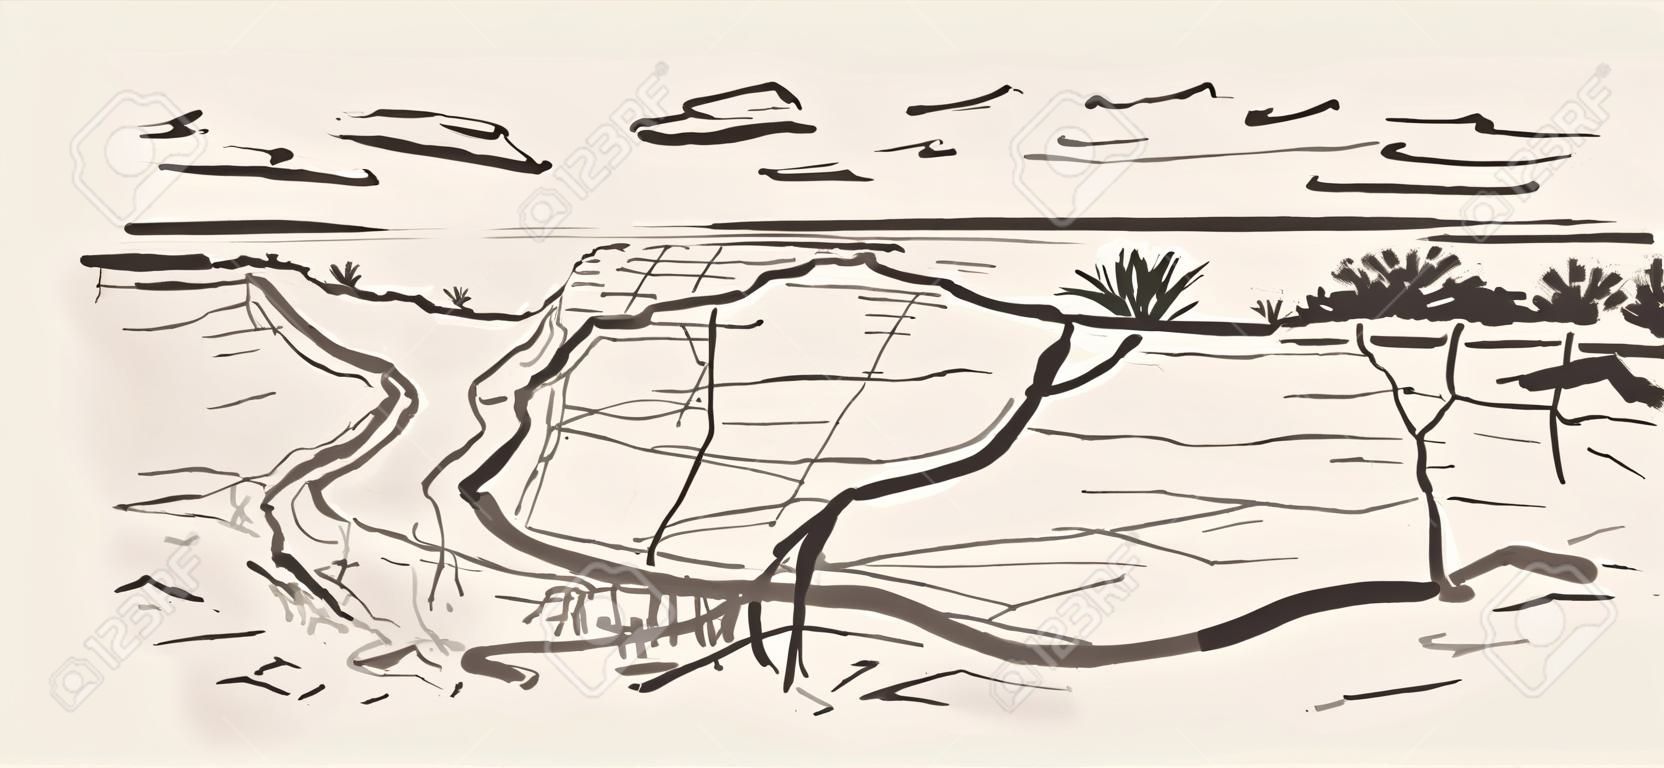 Grand canyon hand drawn style. Arizona sketch illustration on white background.